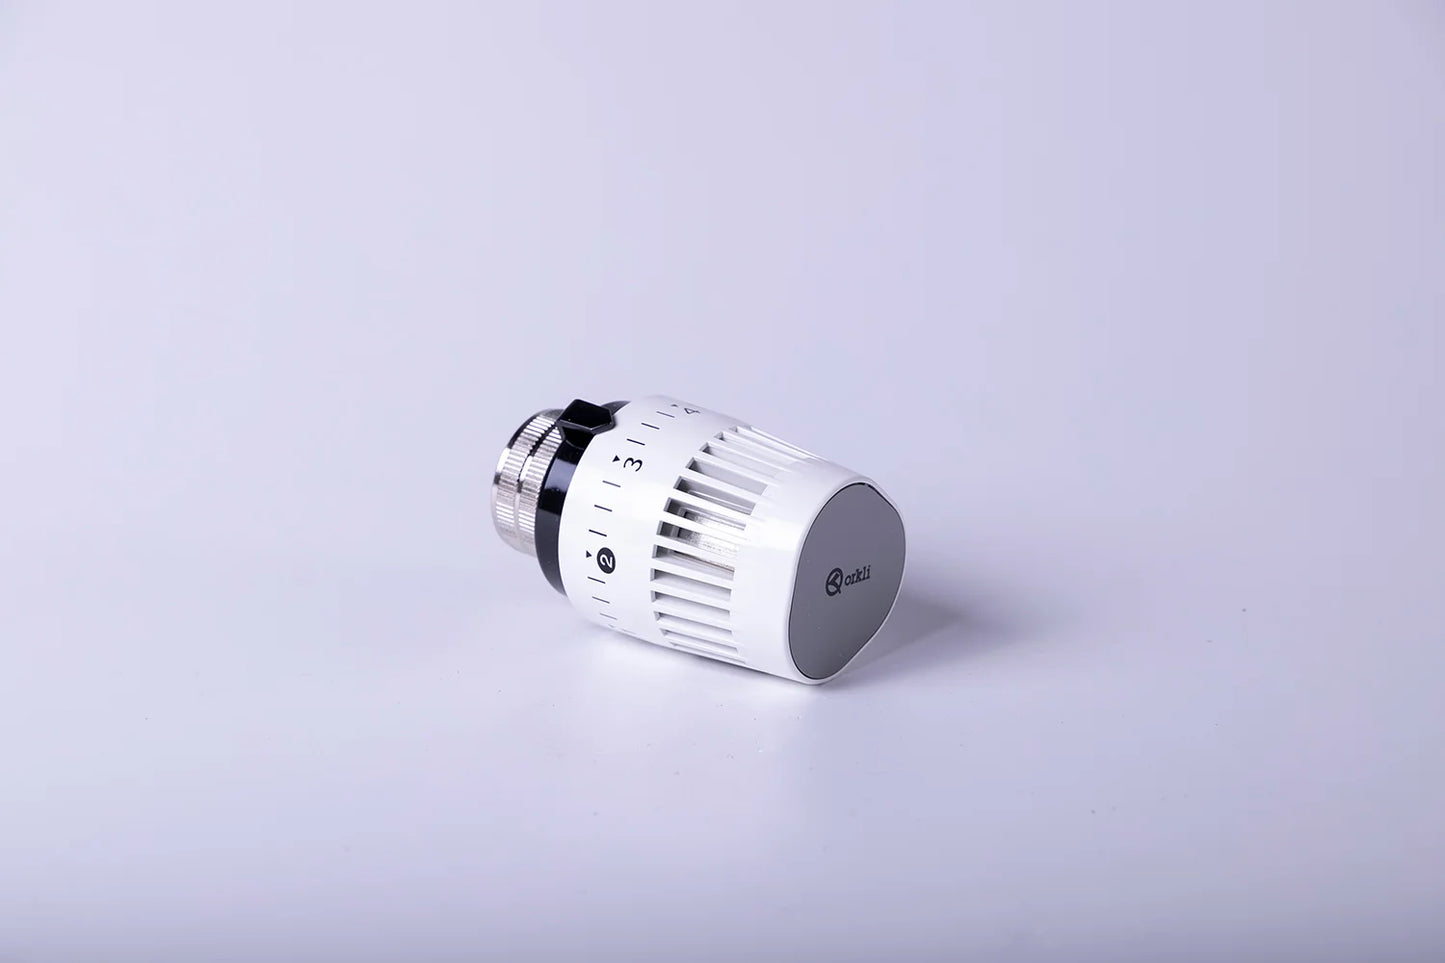 Cabezal termostático Orkli Eroso M28 x 1.0 sensor líquido blanco 5-27°C